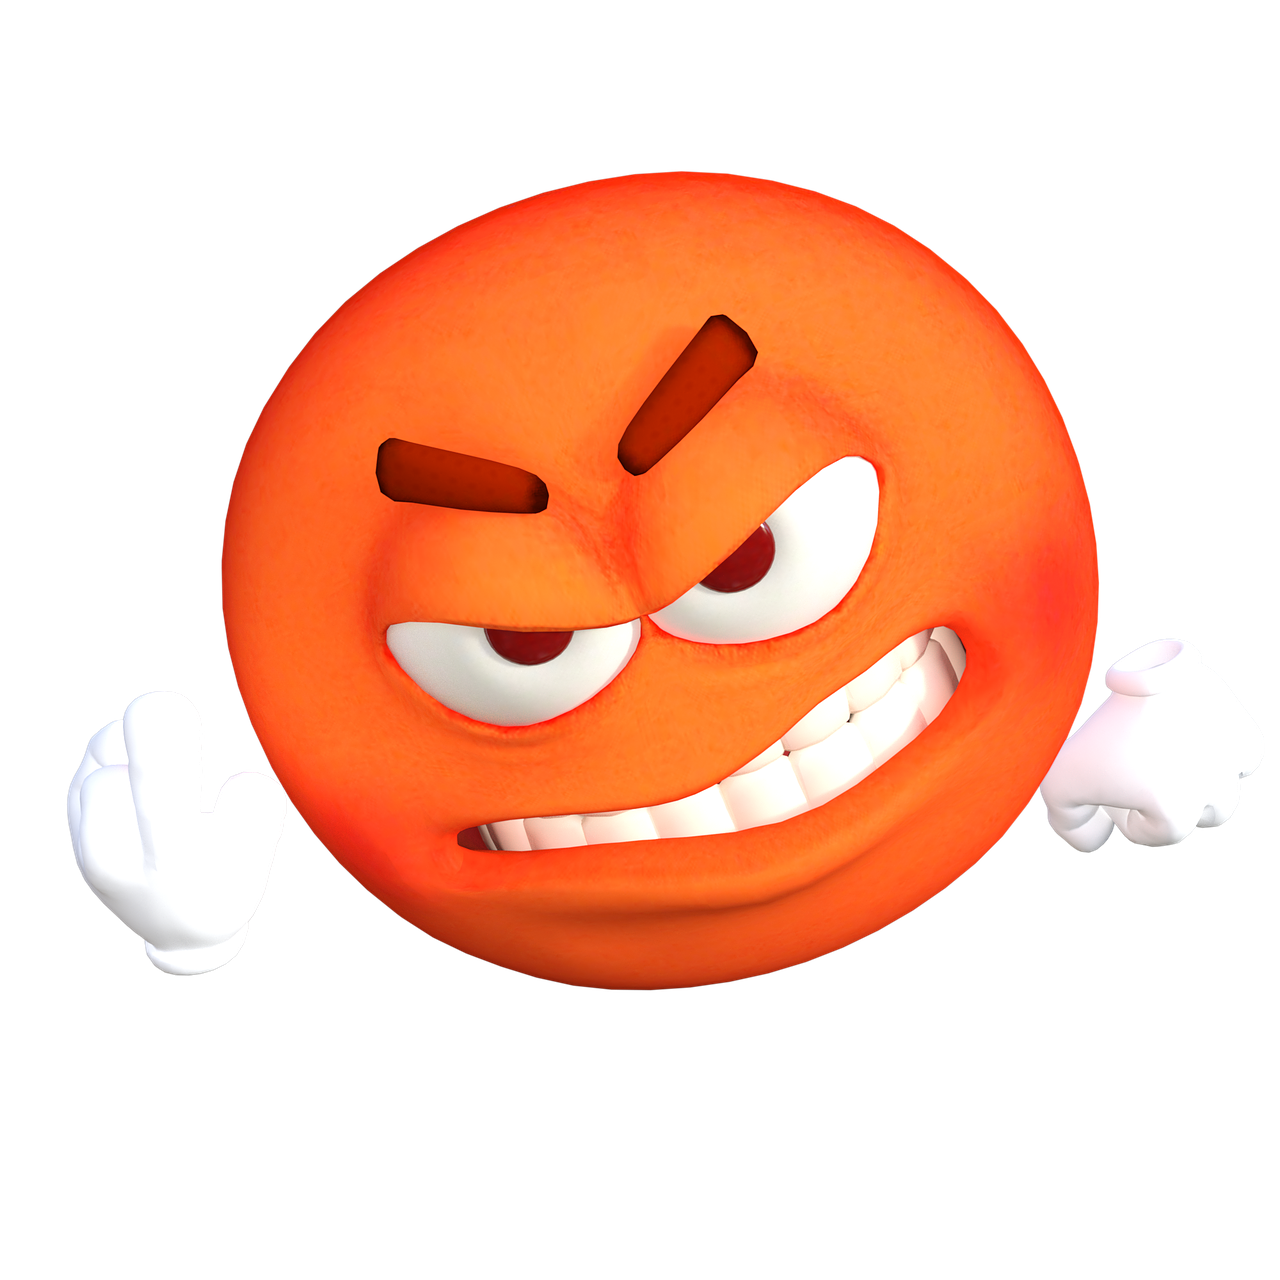 Red Angry Crying Emoji PNG Image